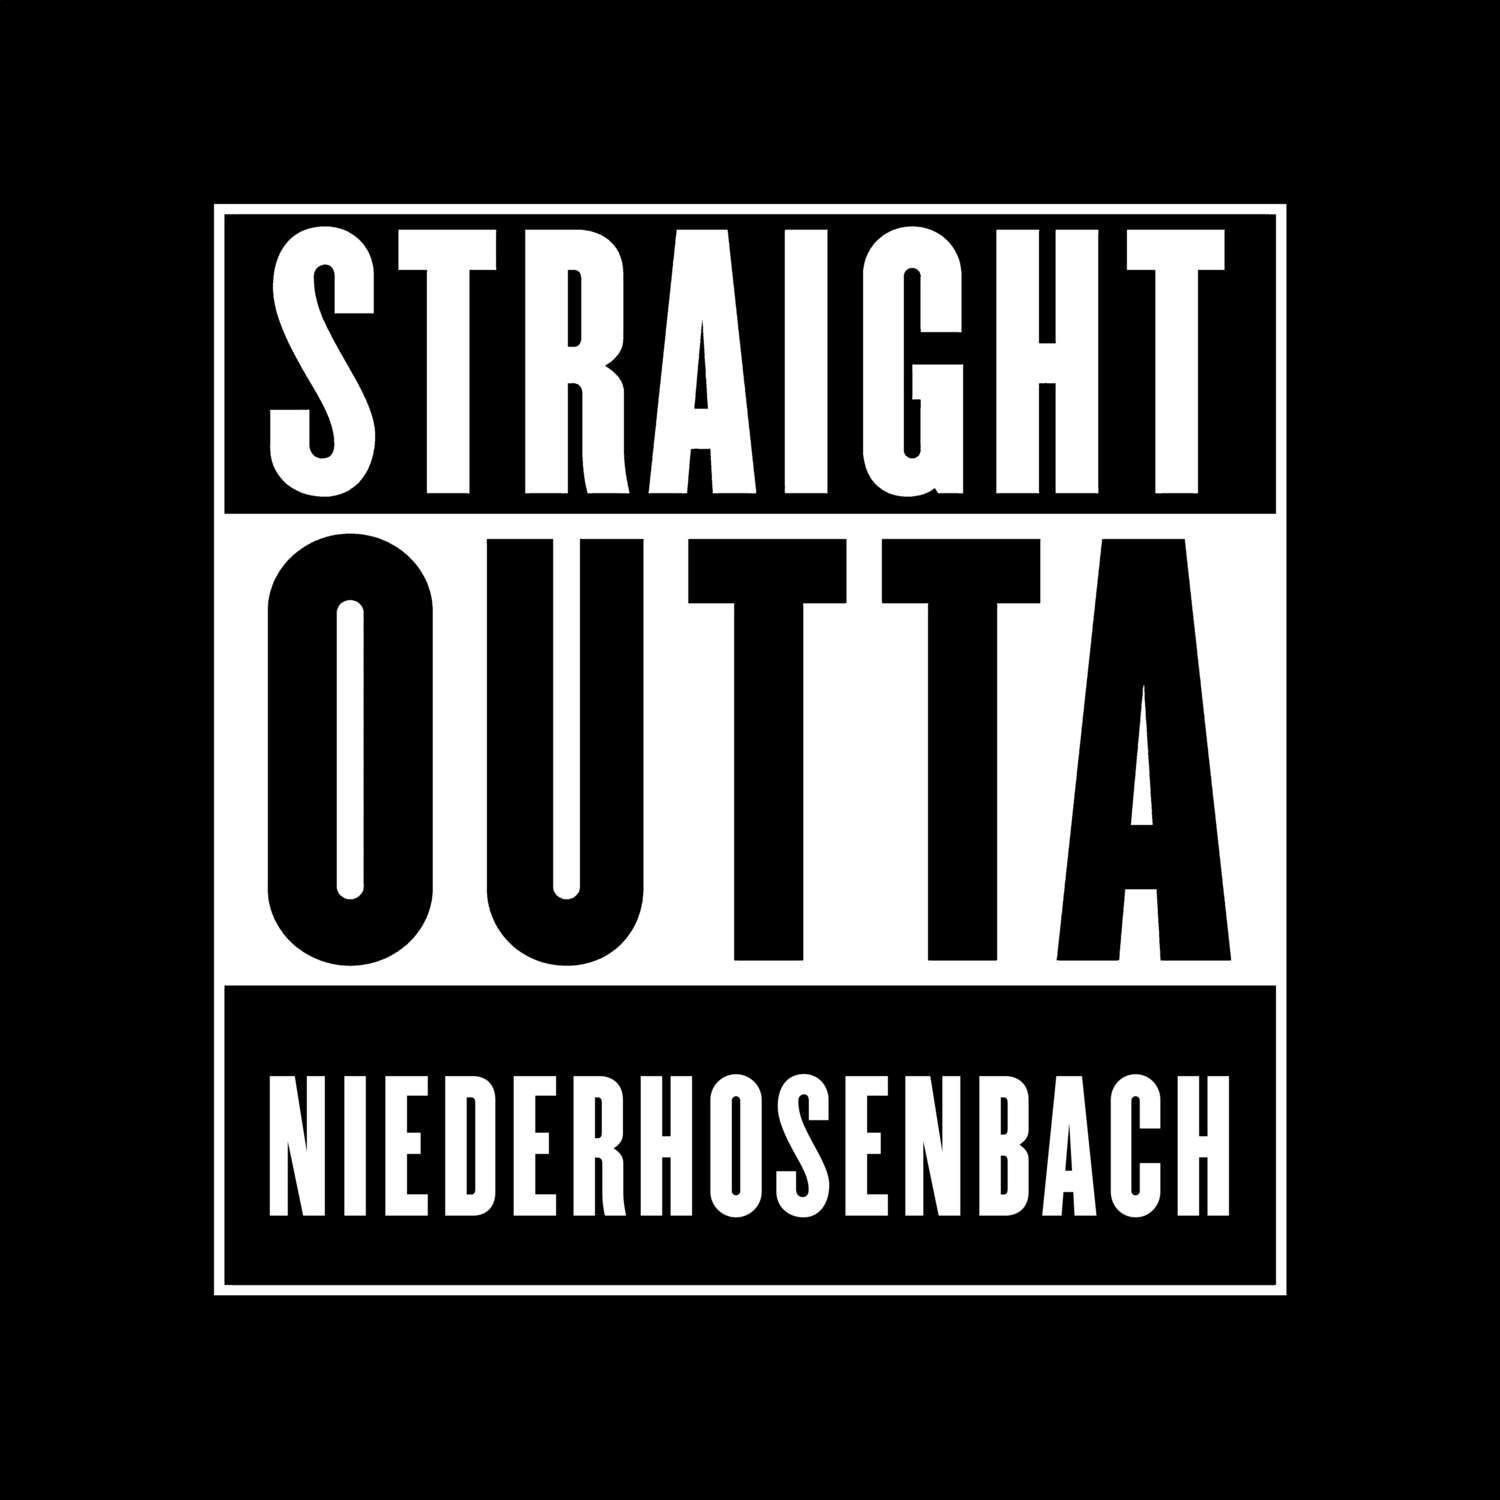 Niederhosenbach T-Shirt »Straight Outta«